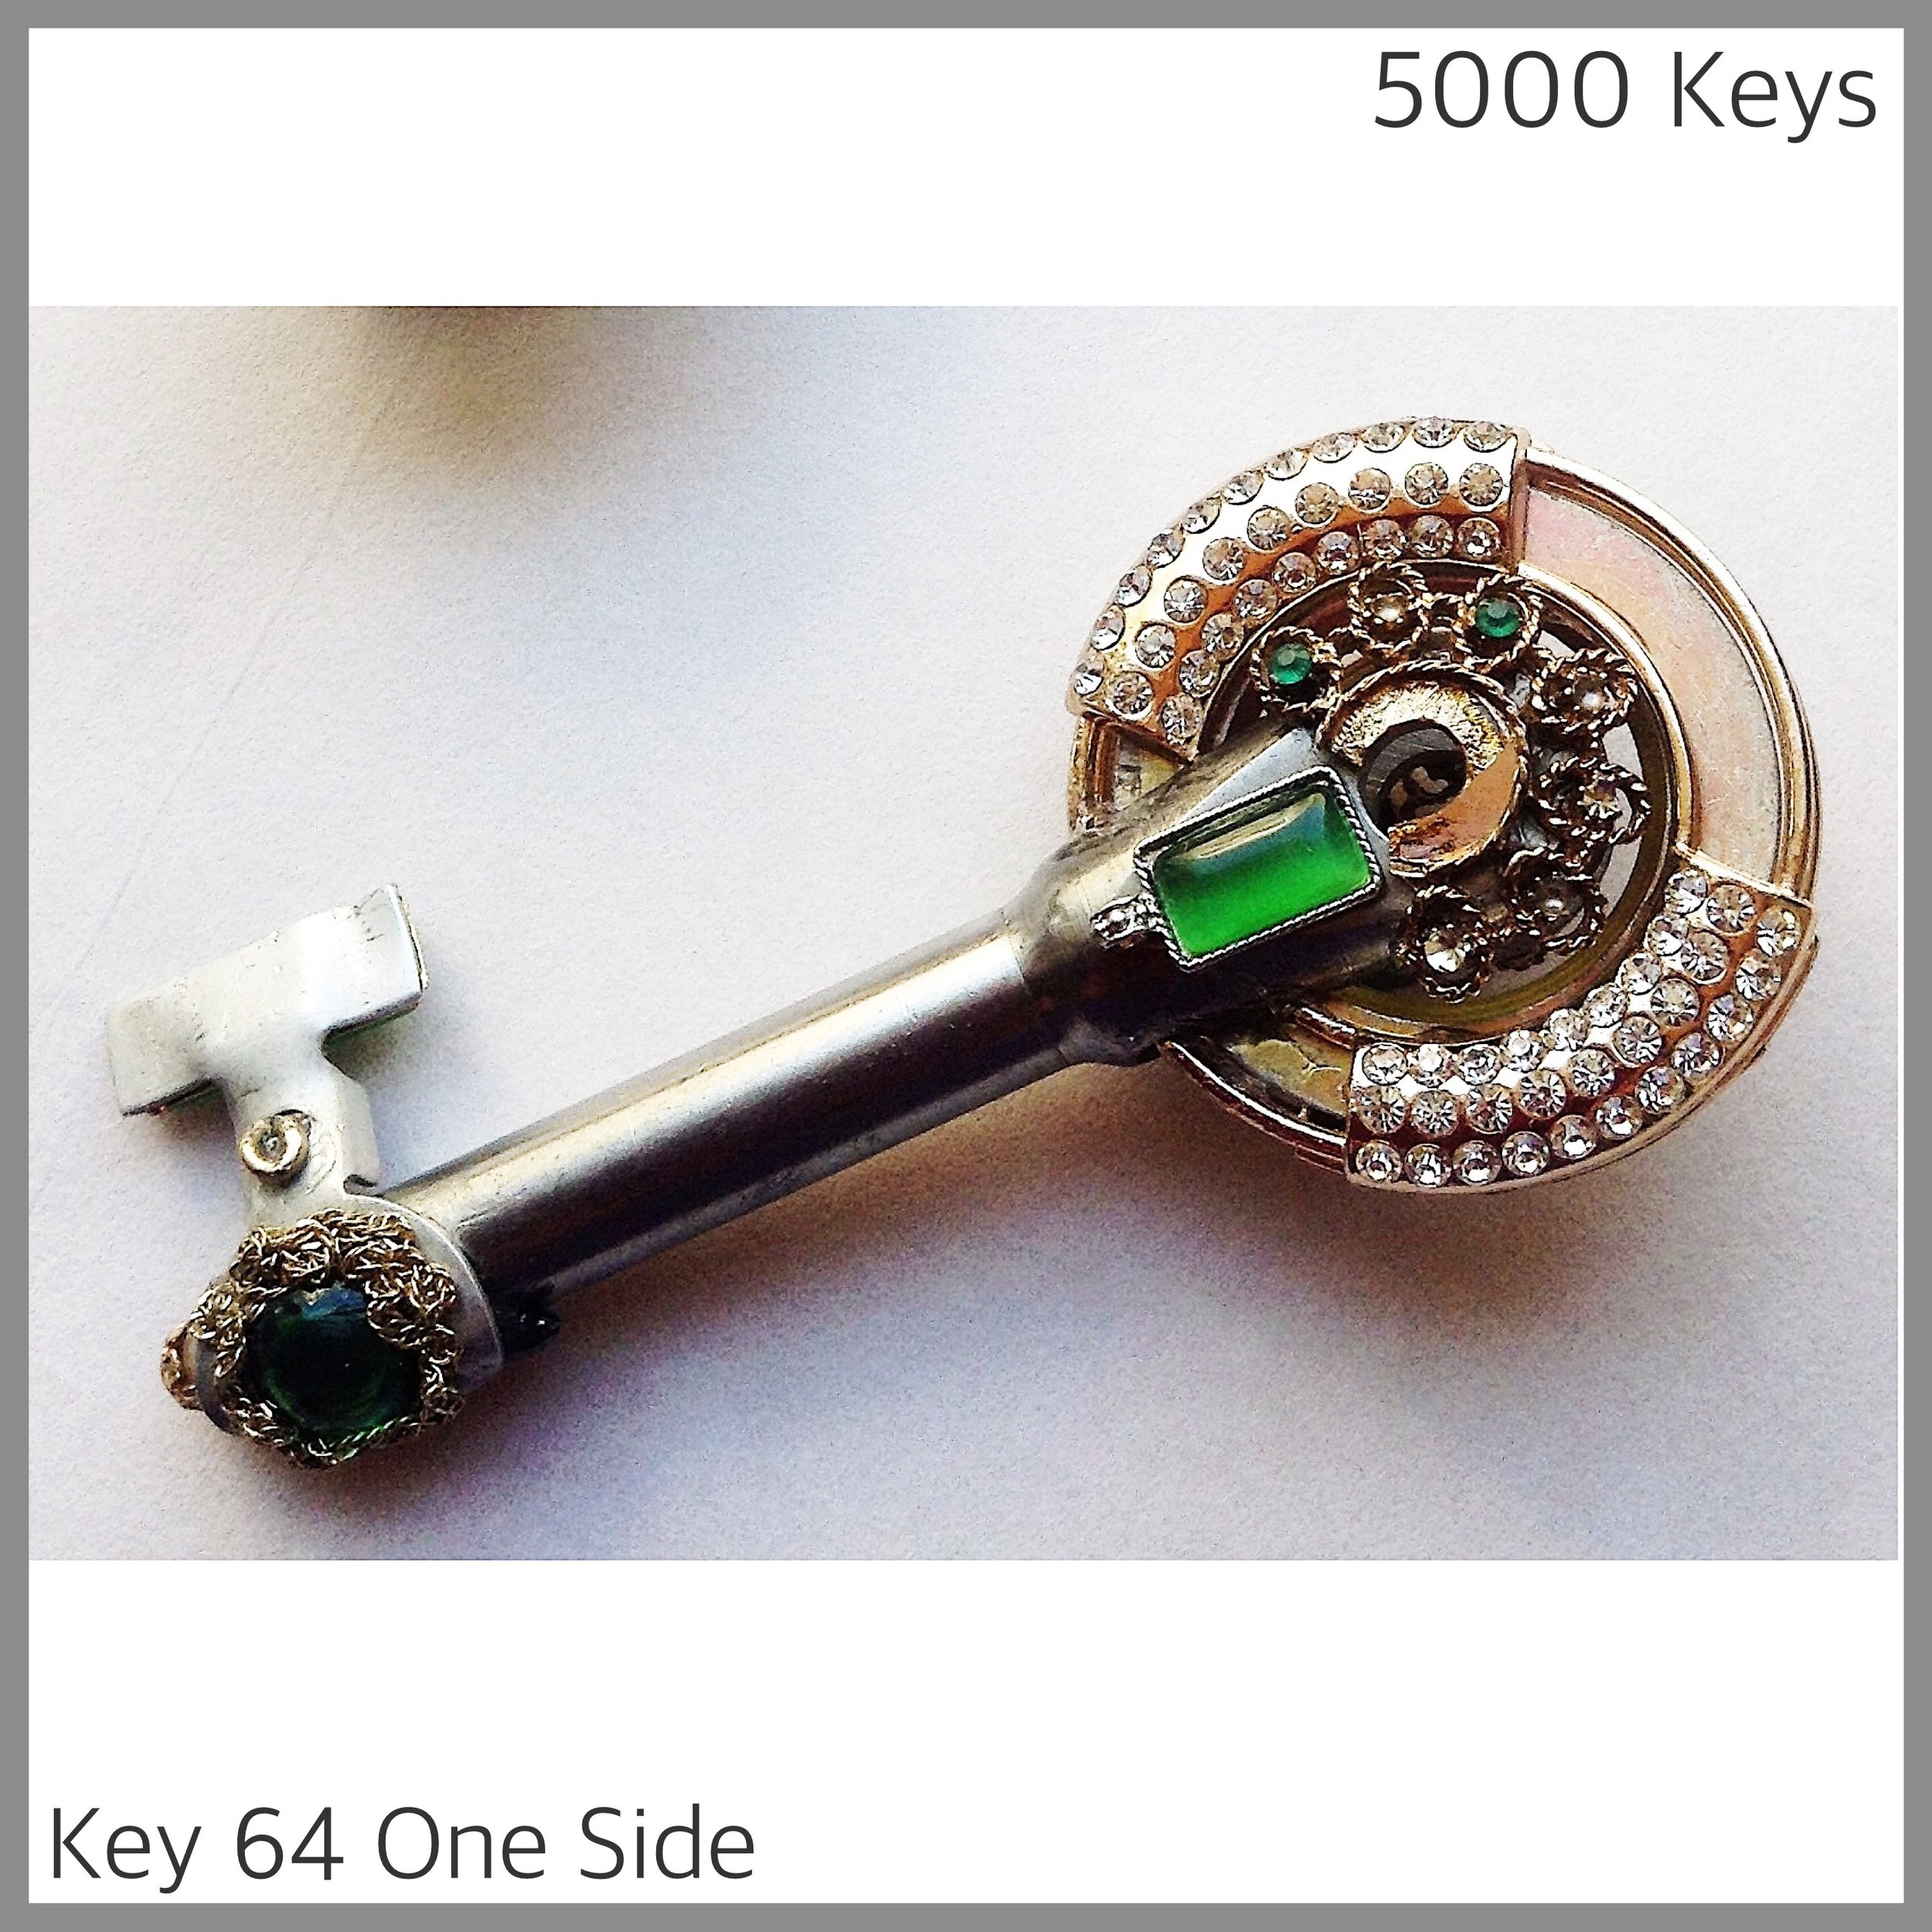 Key 64 one side - 1.JPG